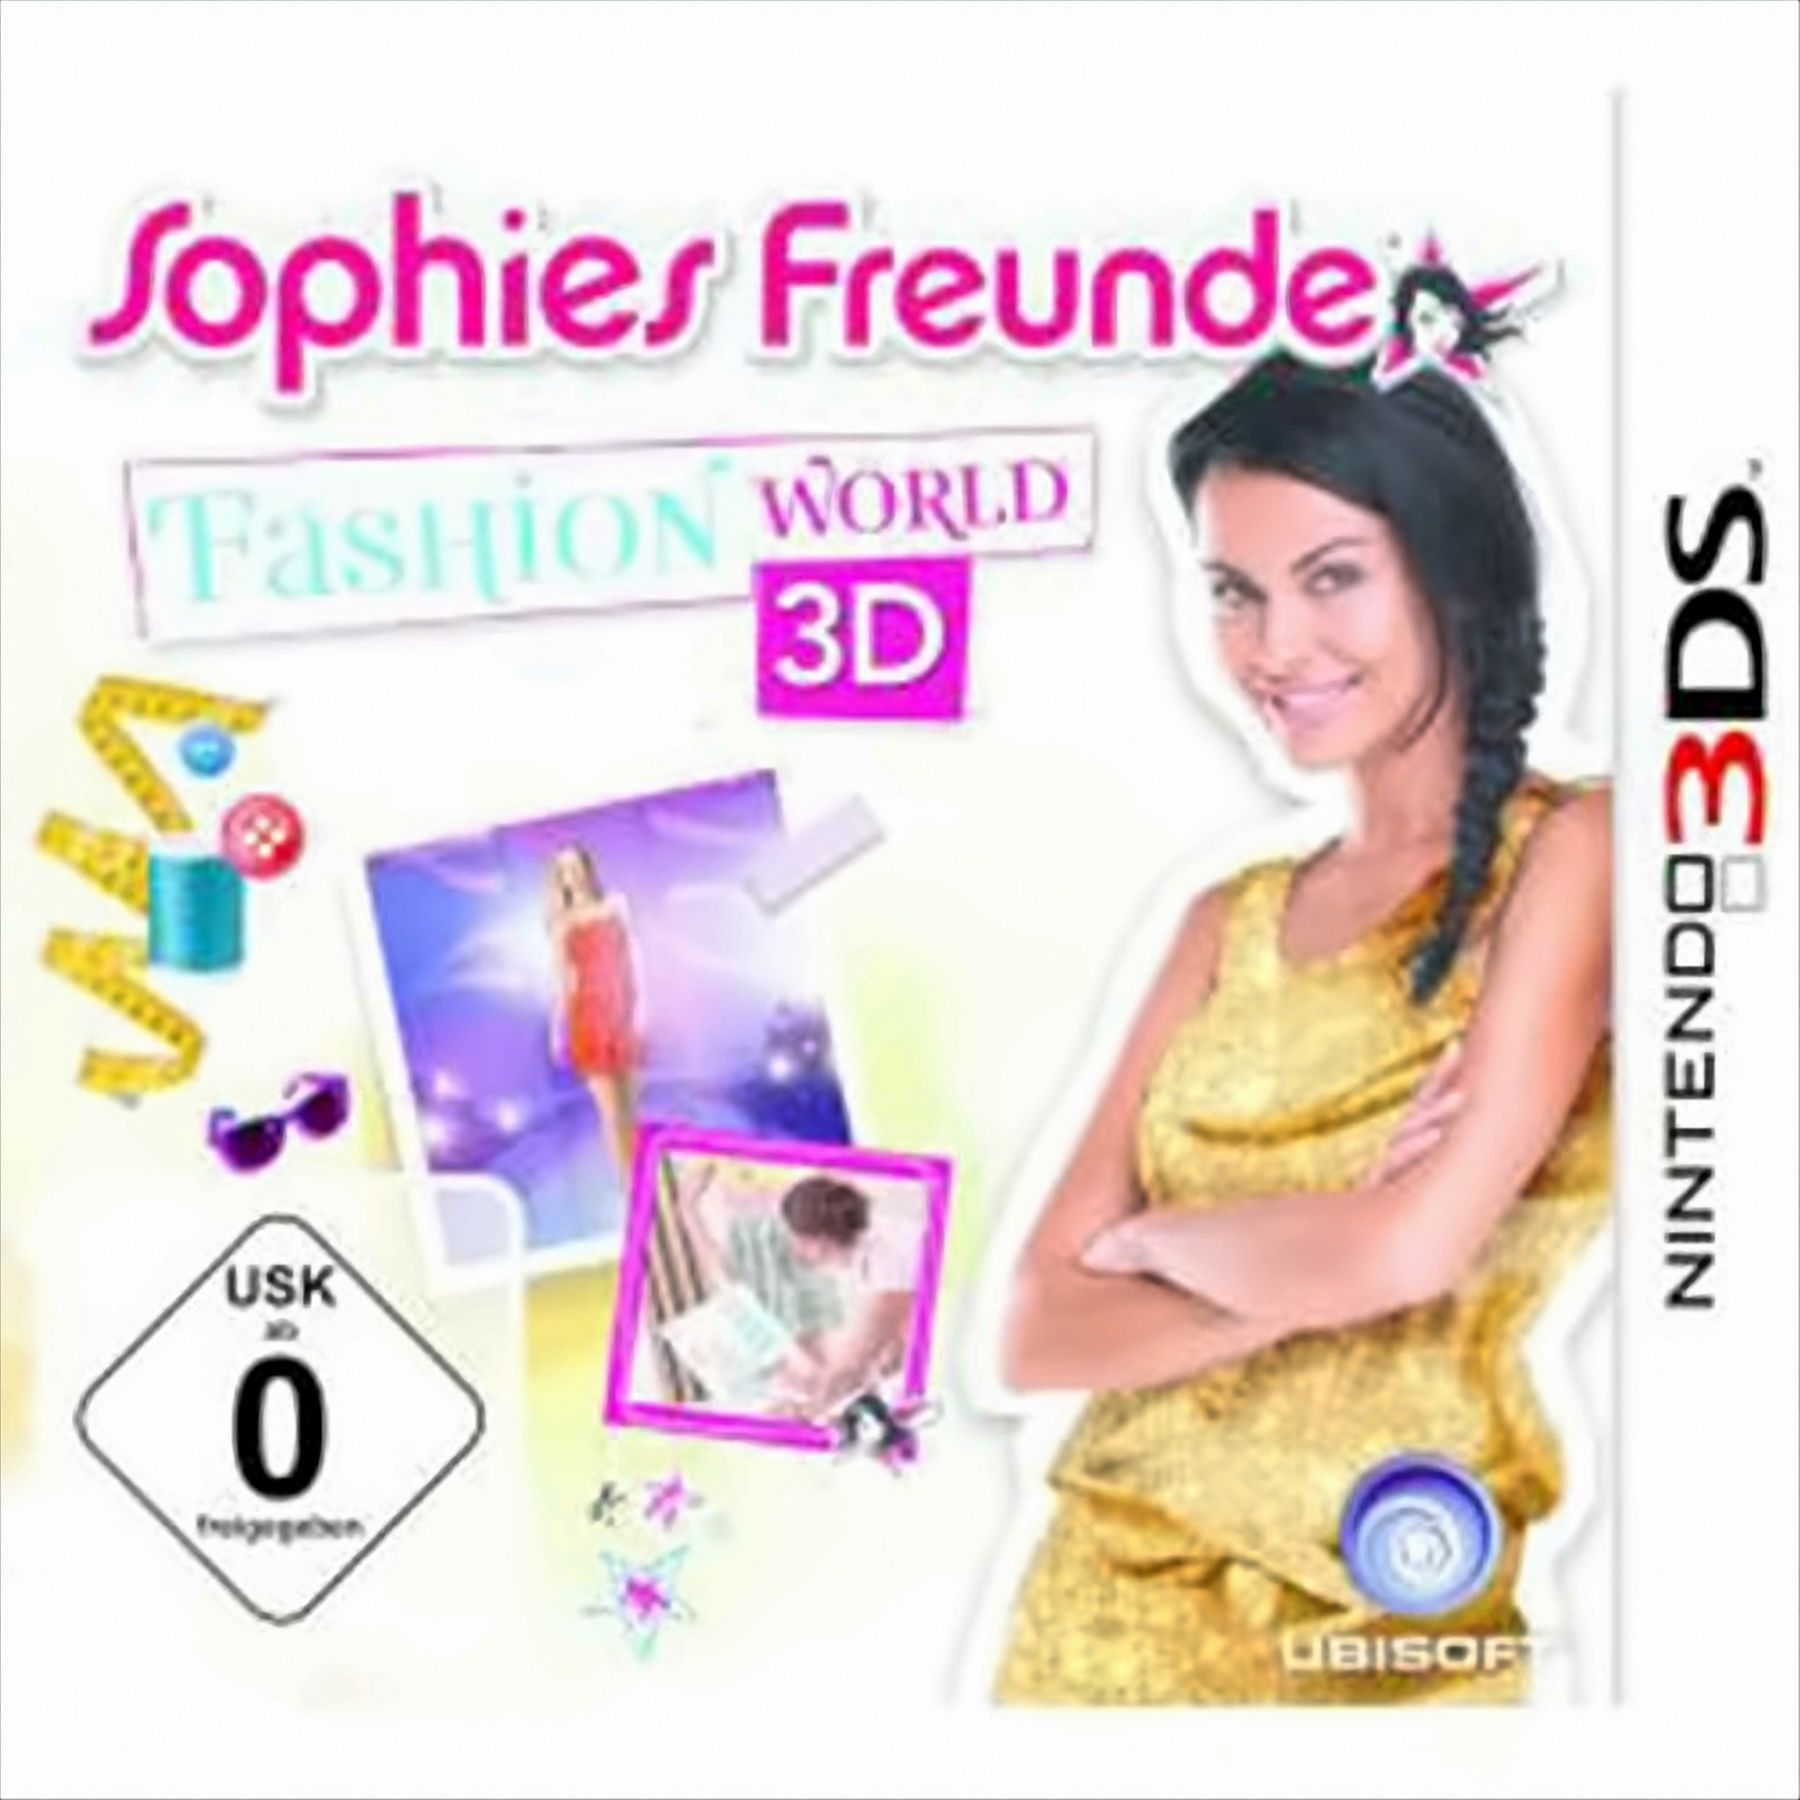 Sophies Freunde: Fashion World [Nintendo 3D 3DS] 